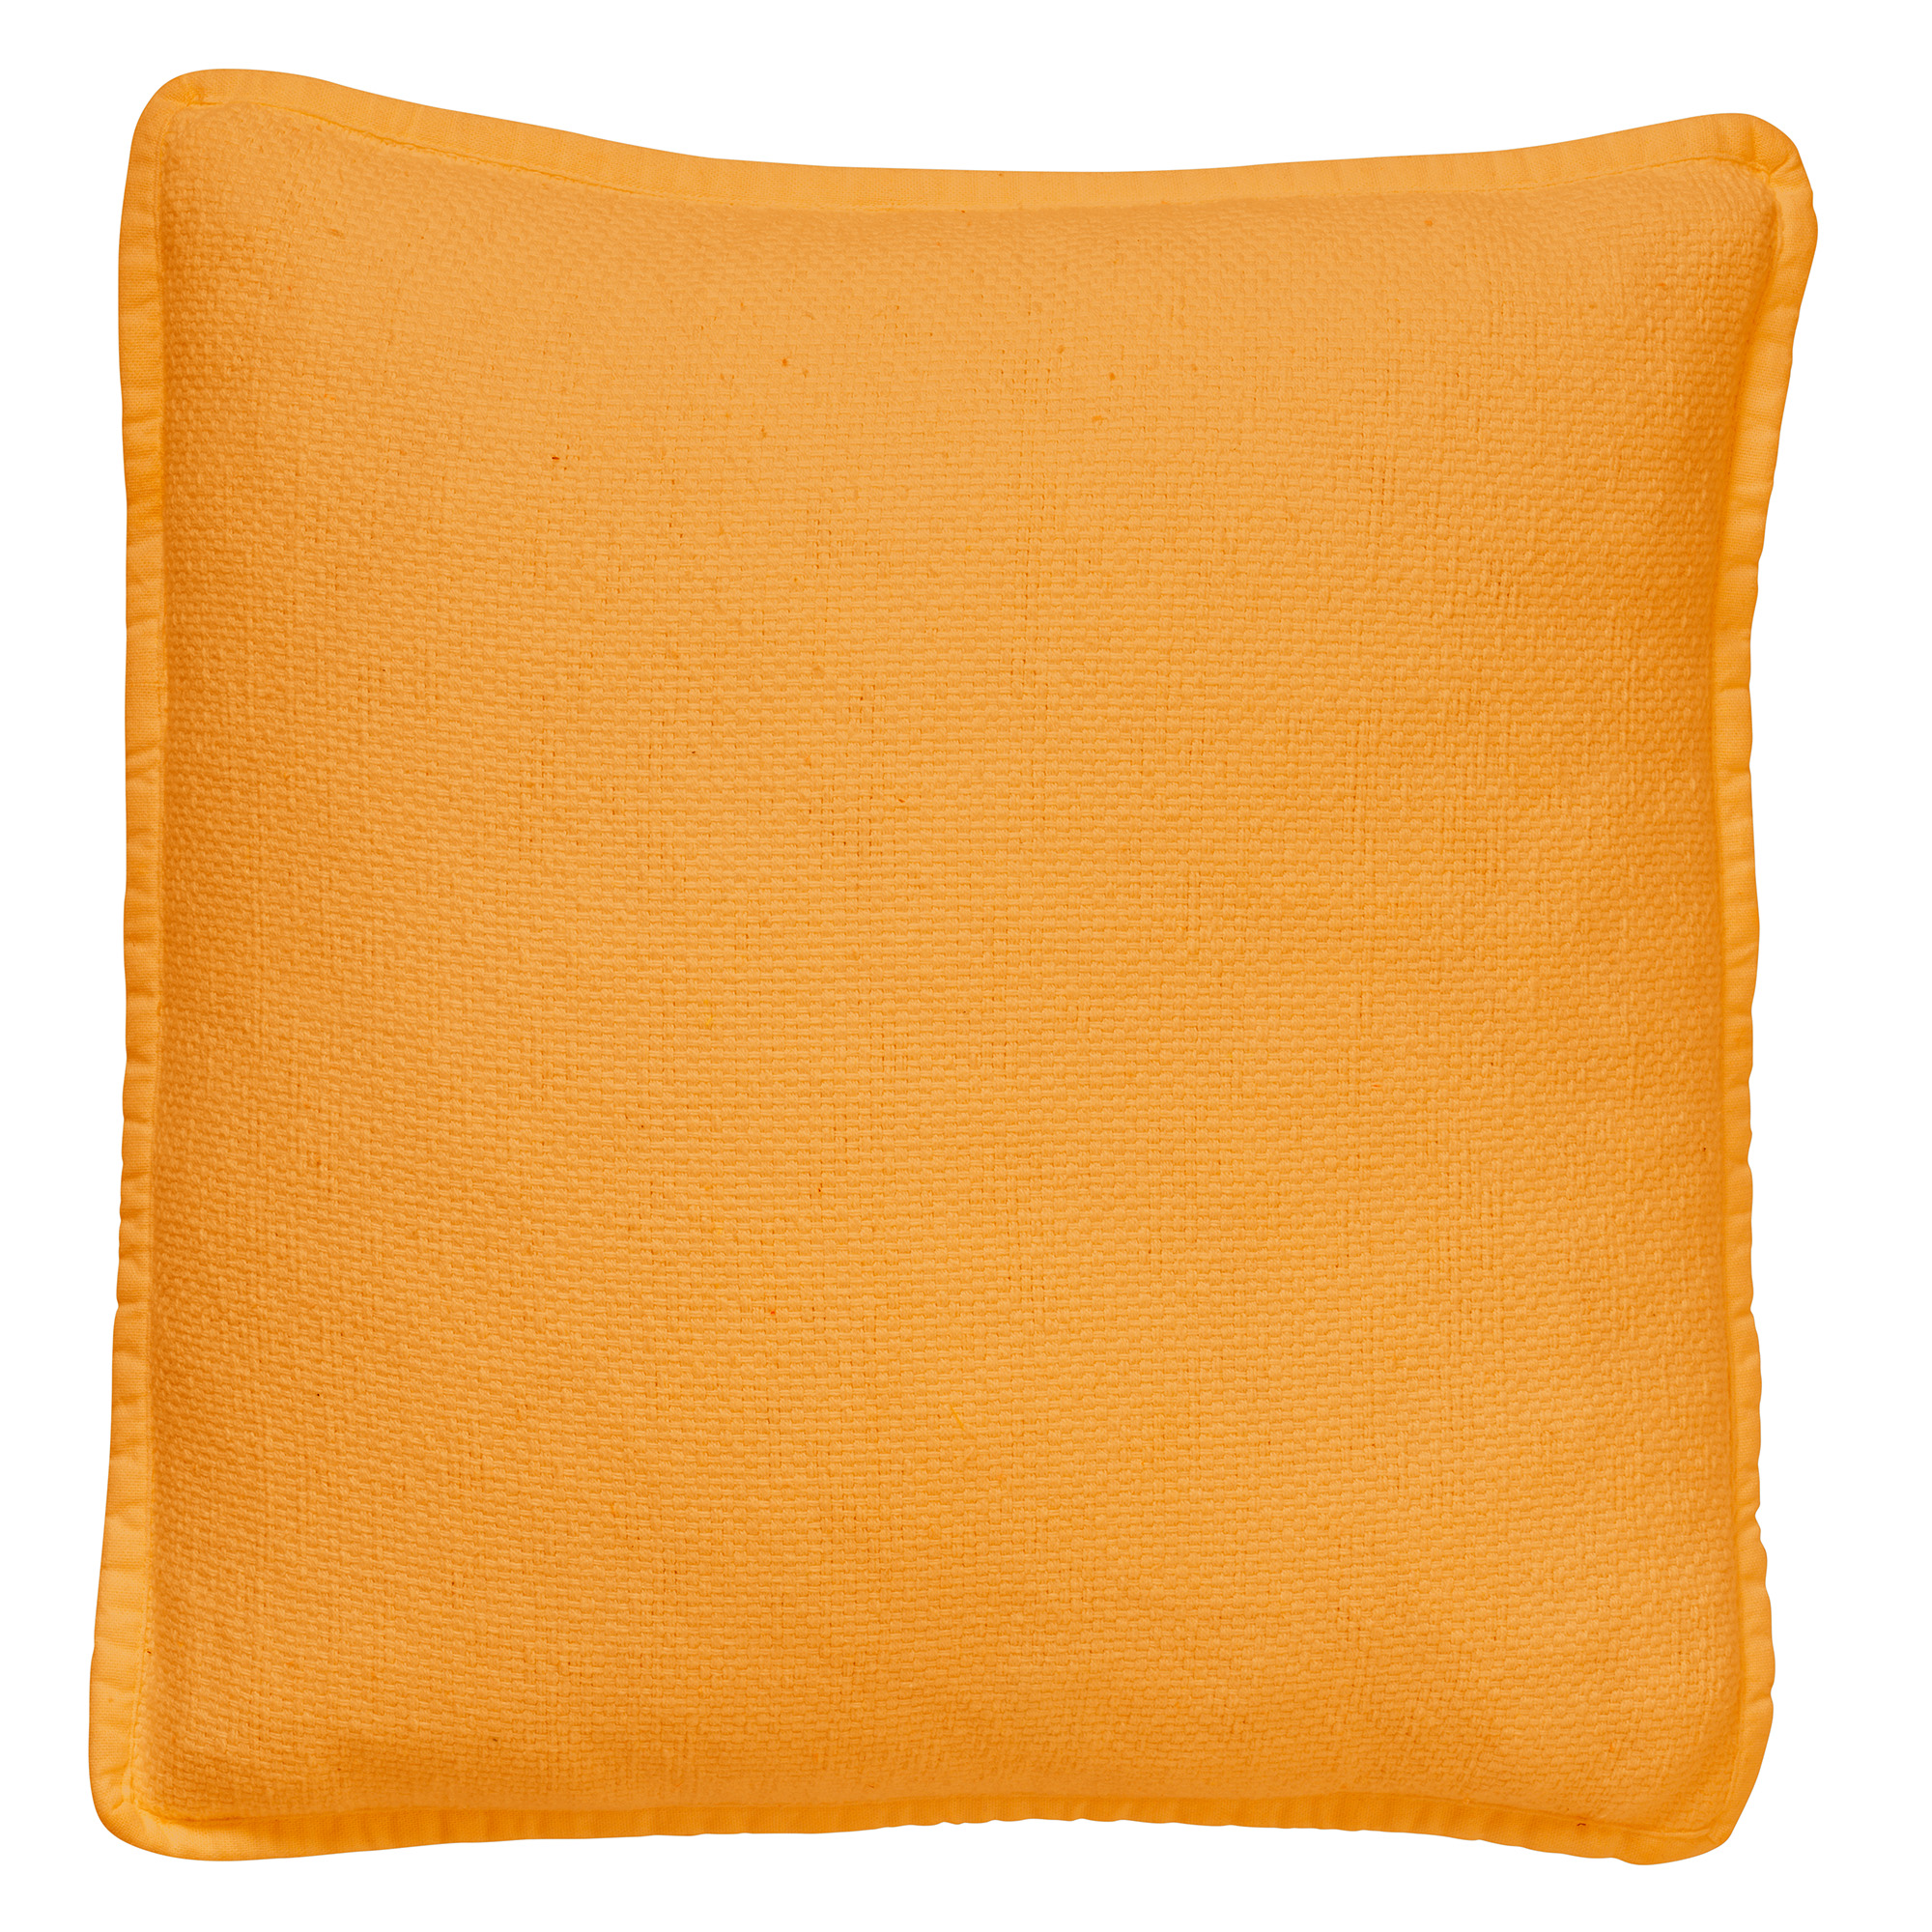 BOWIE - Cushion 45x45 cm Golden Glow - yellow-ochre